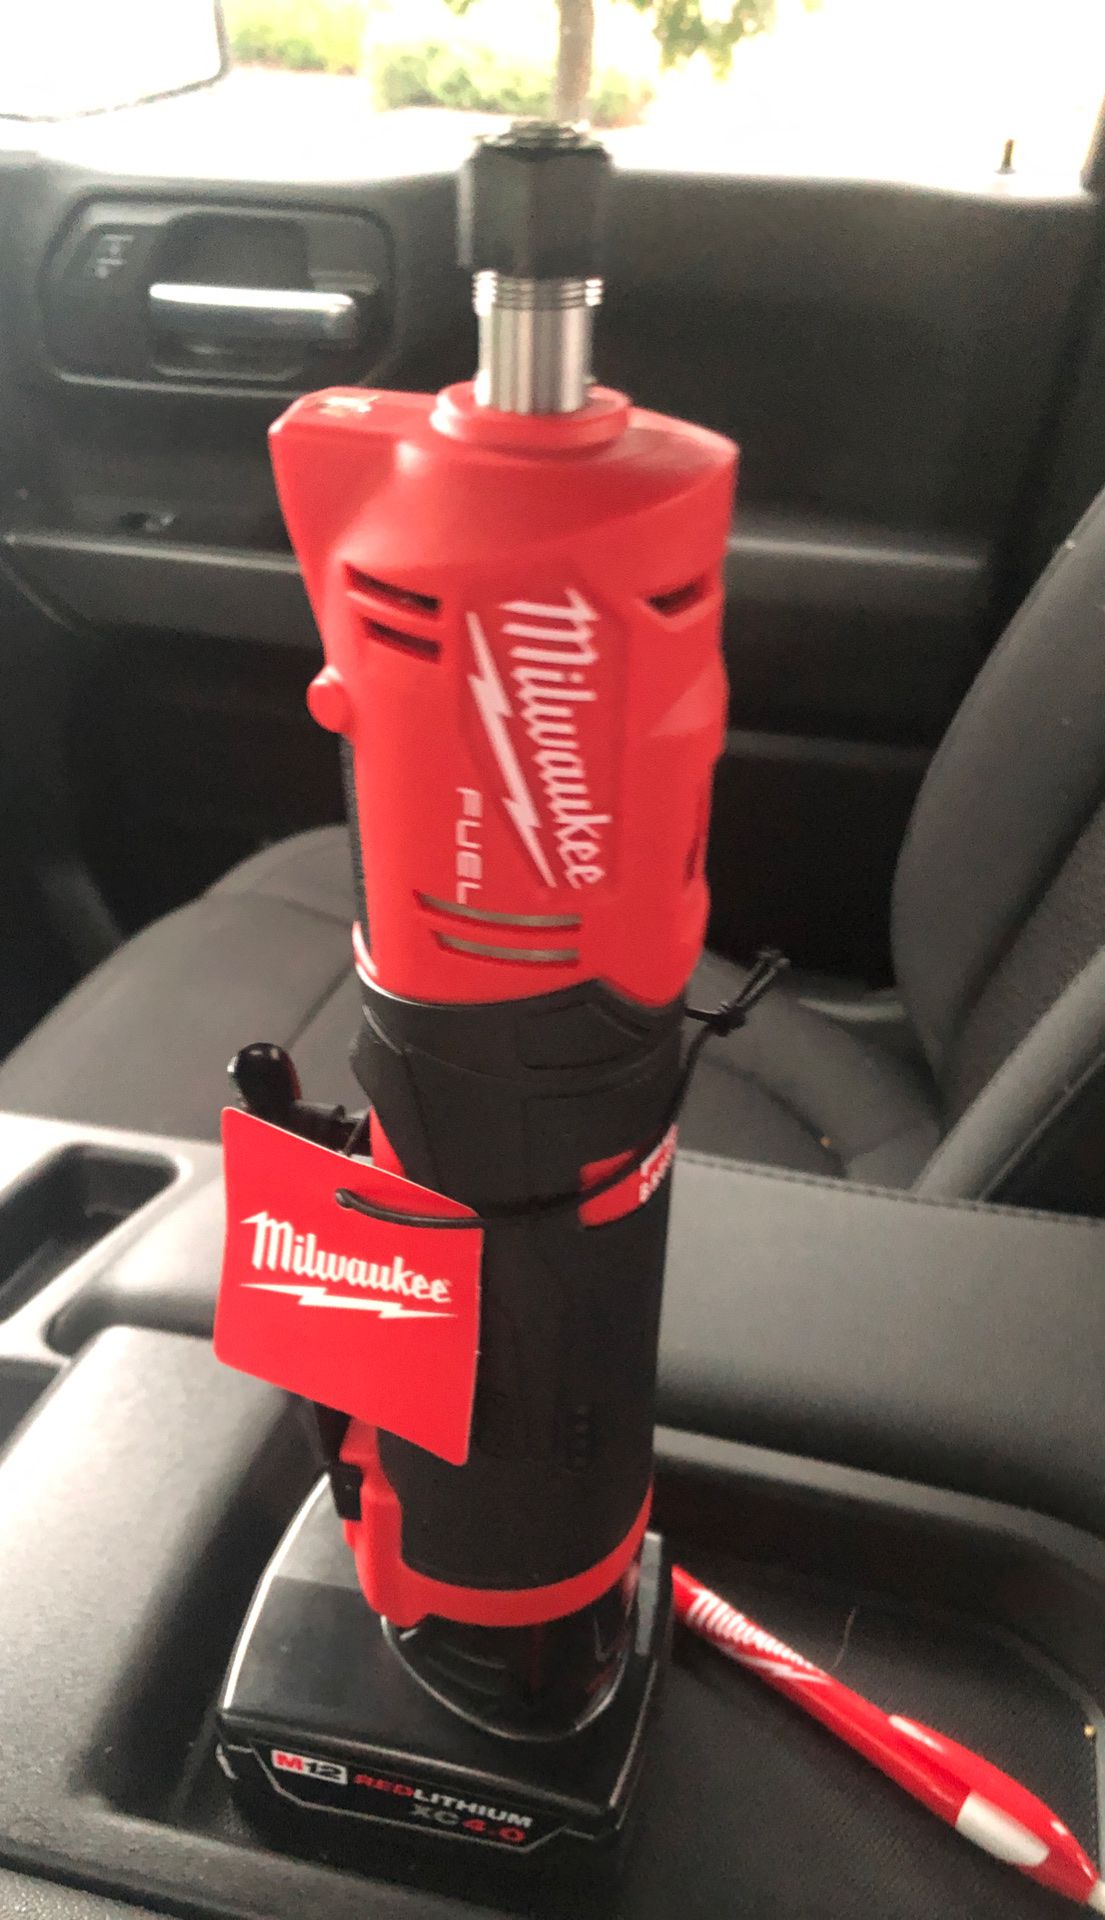 Milwaukee die grinder with 4.0 battery